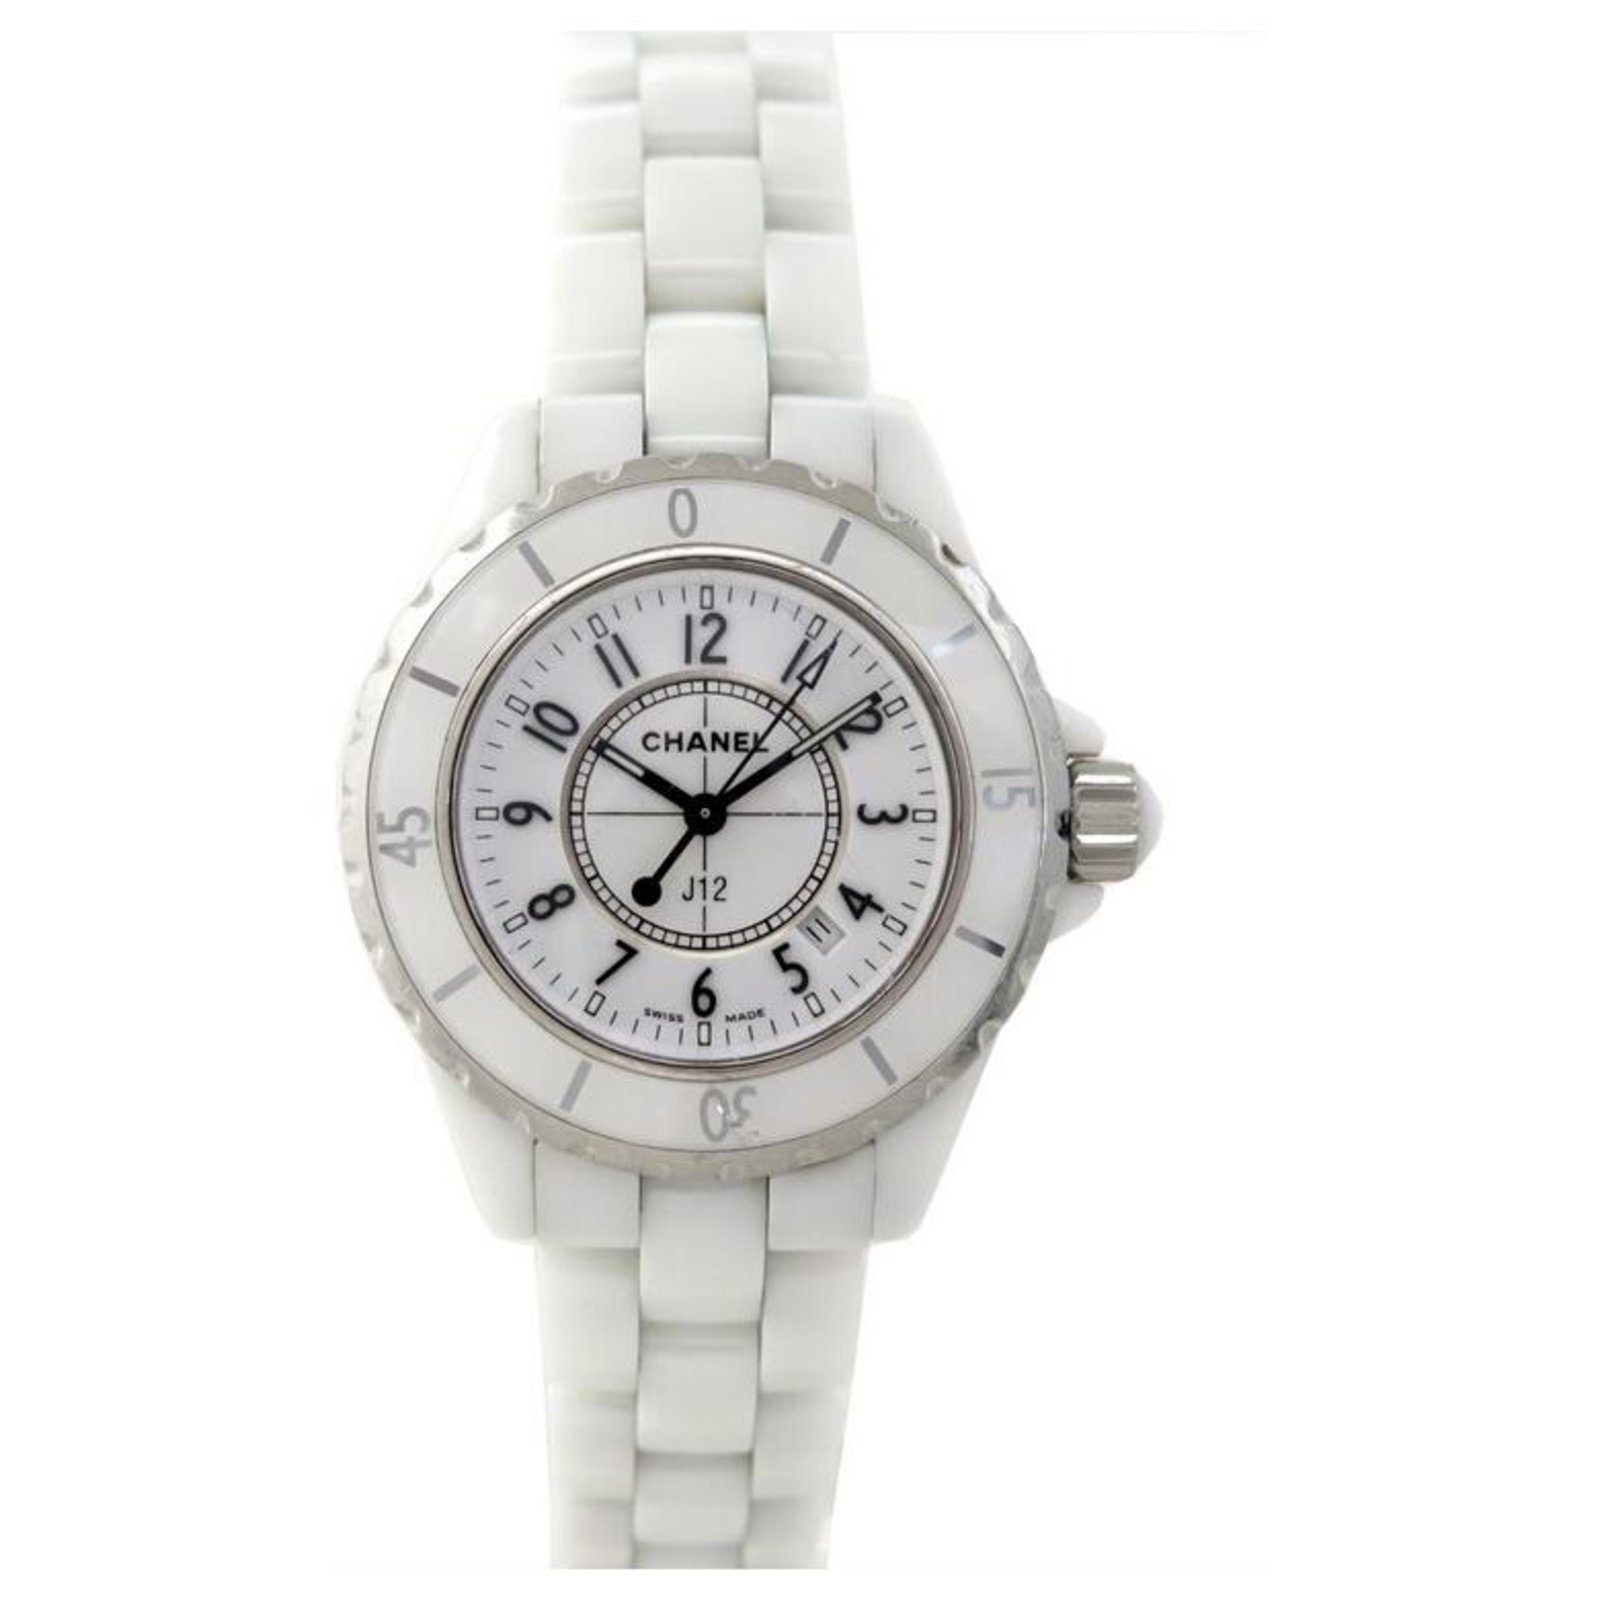 Chanel J watch12 H0968 33 MM DATE CERAMIC WHITE QUARTZ BOX WATCH